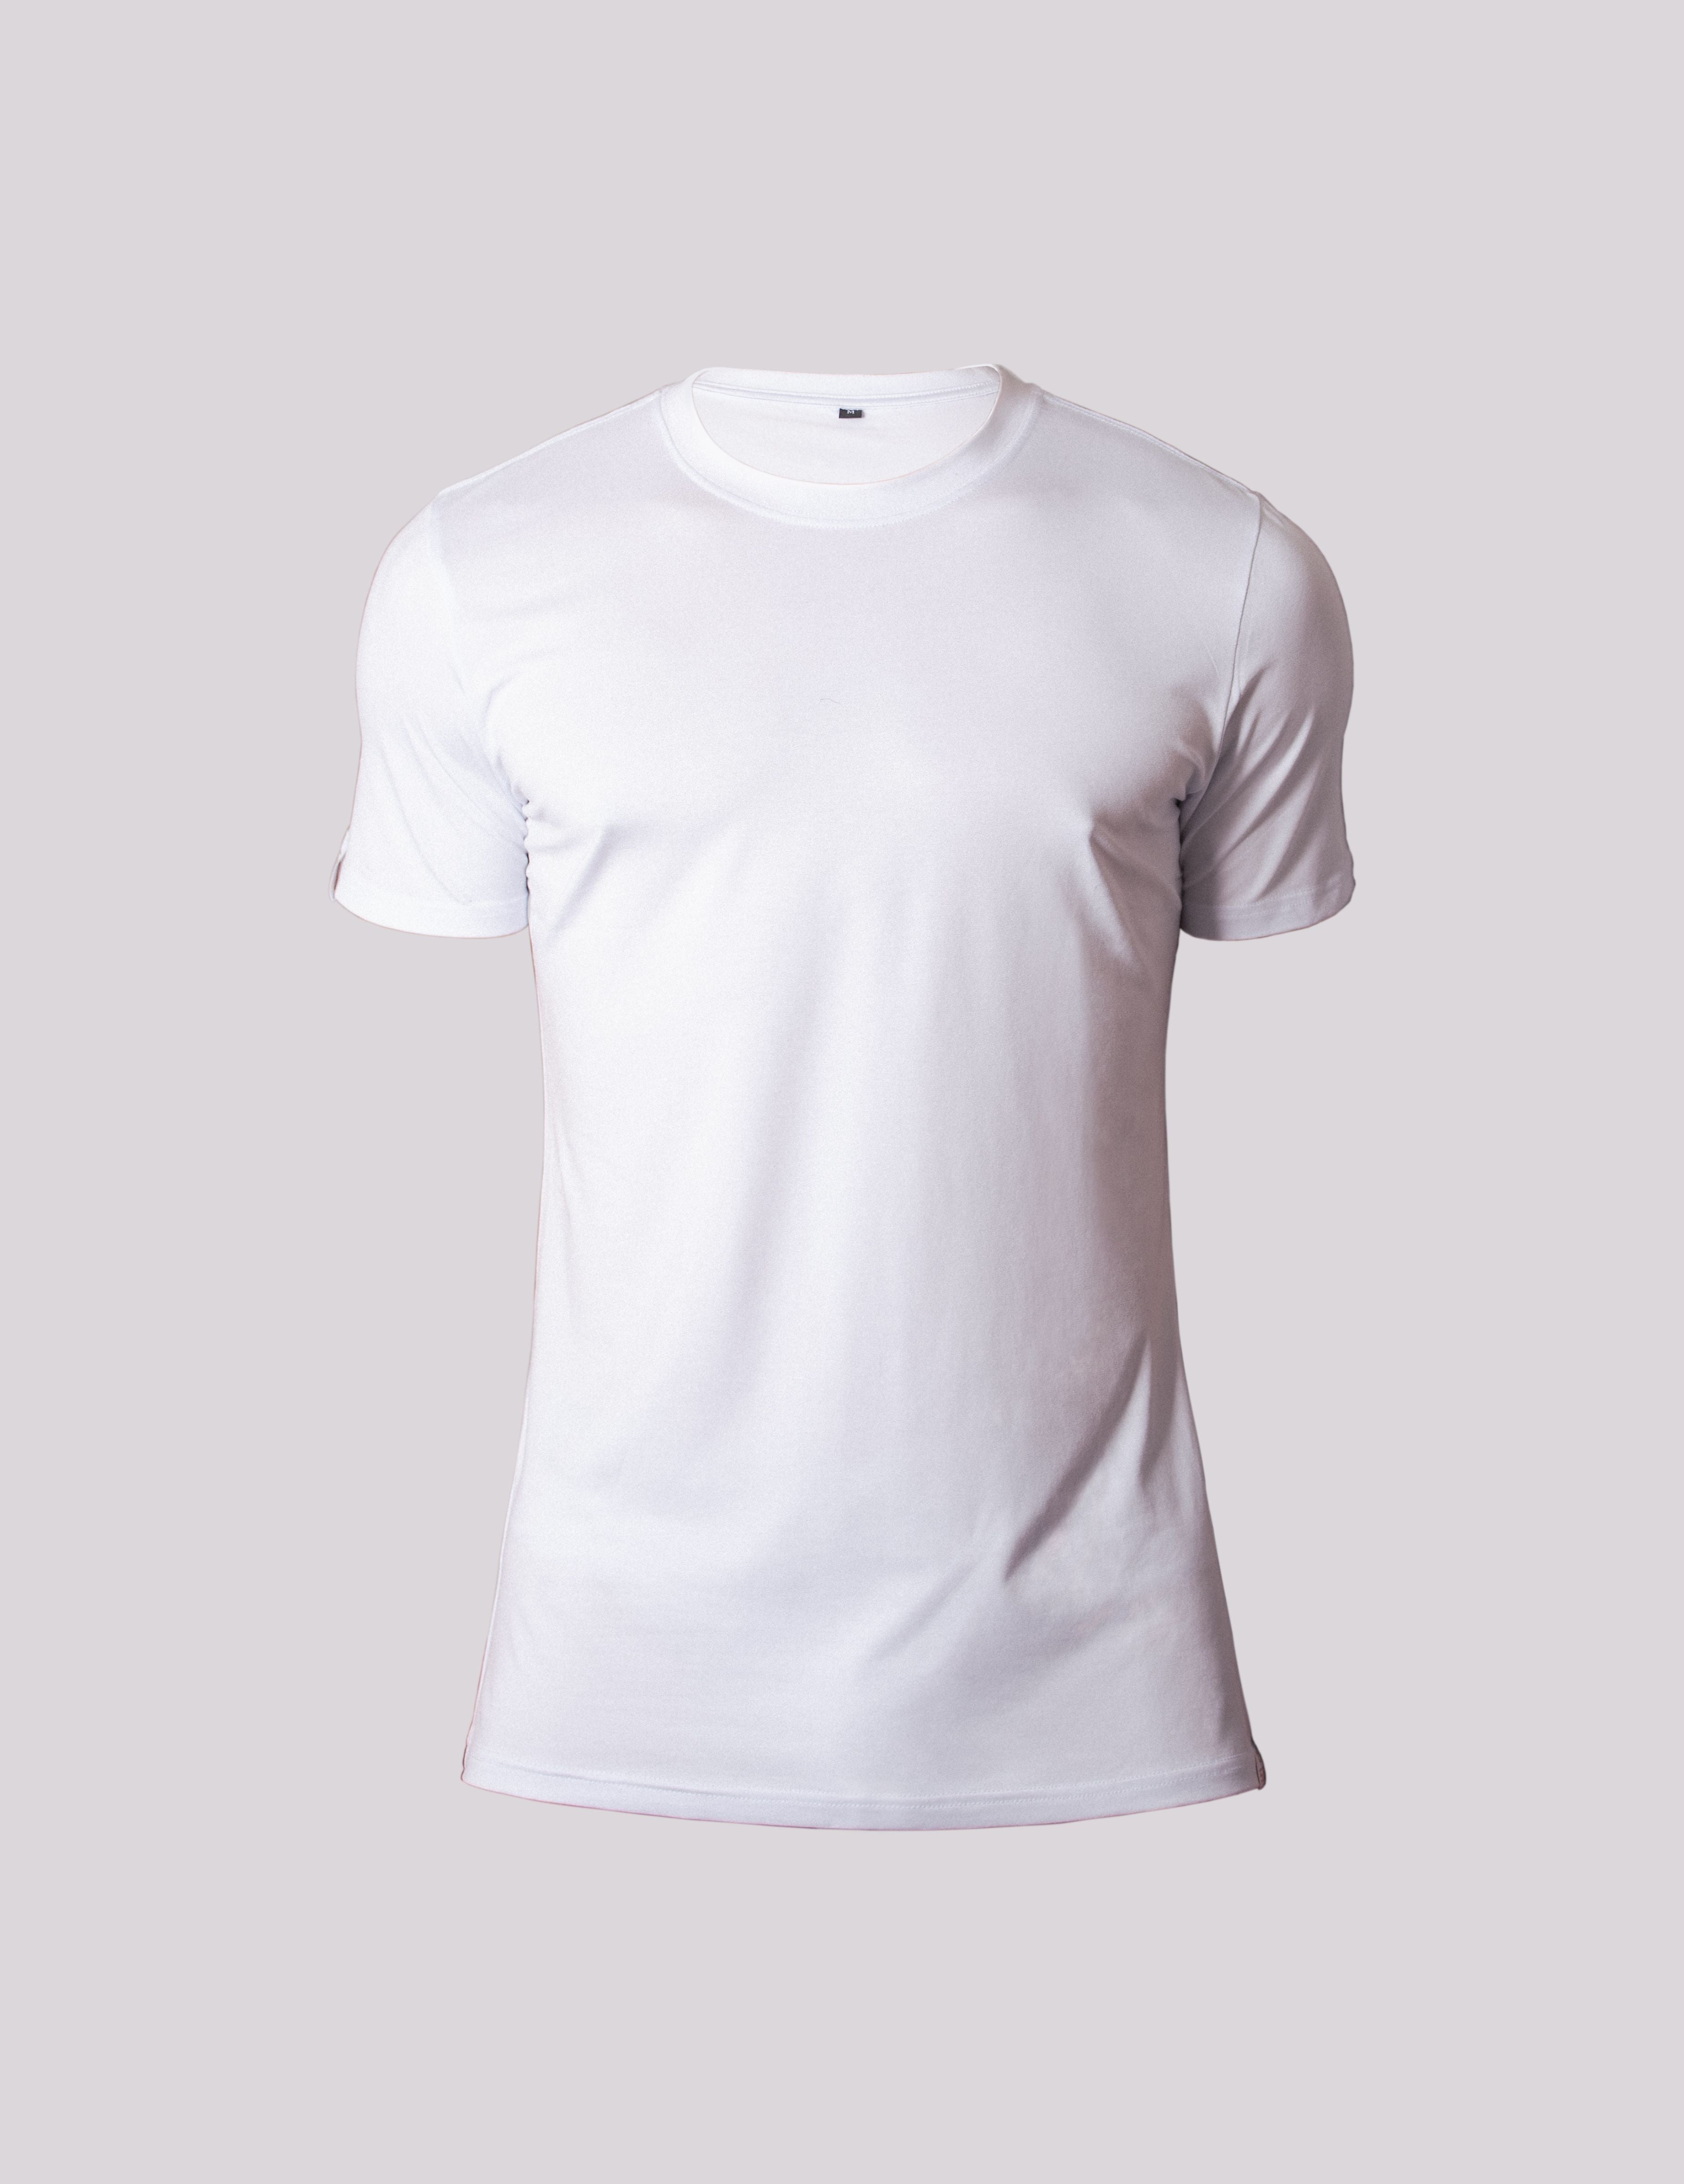 LuxWhiteT-Shirt.jpg